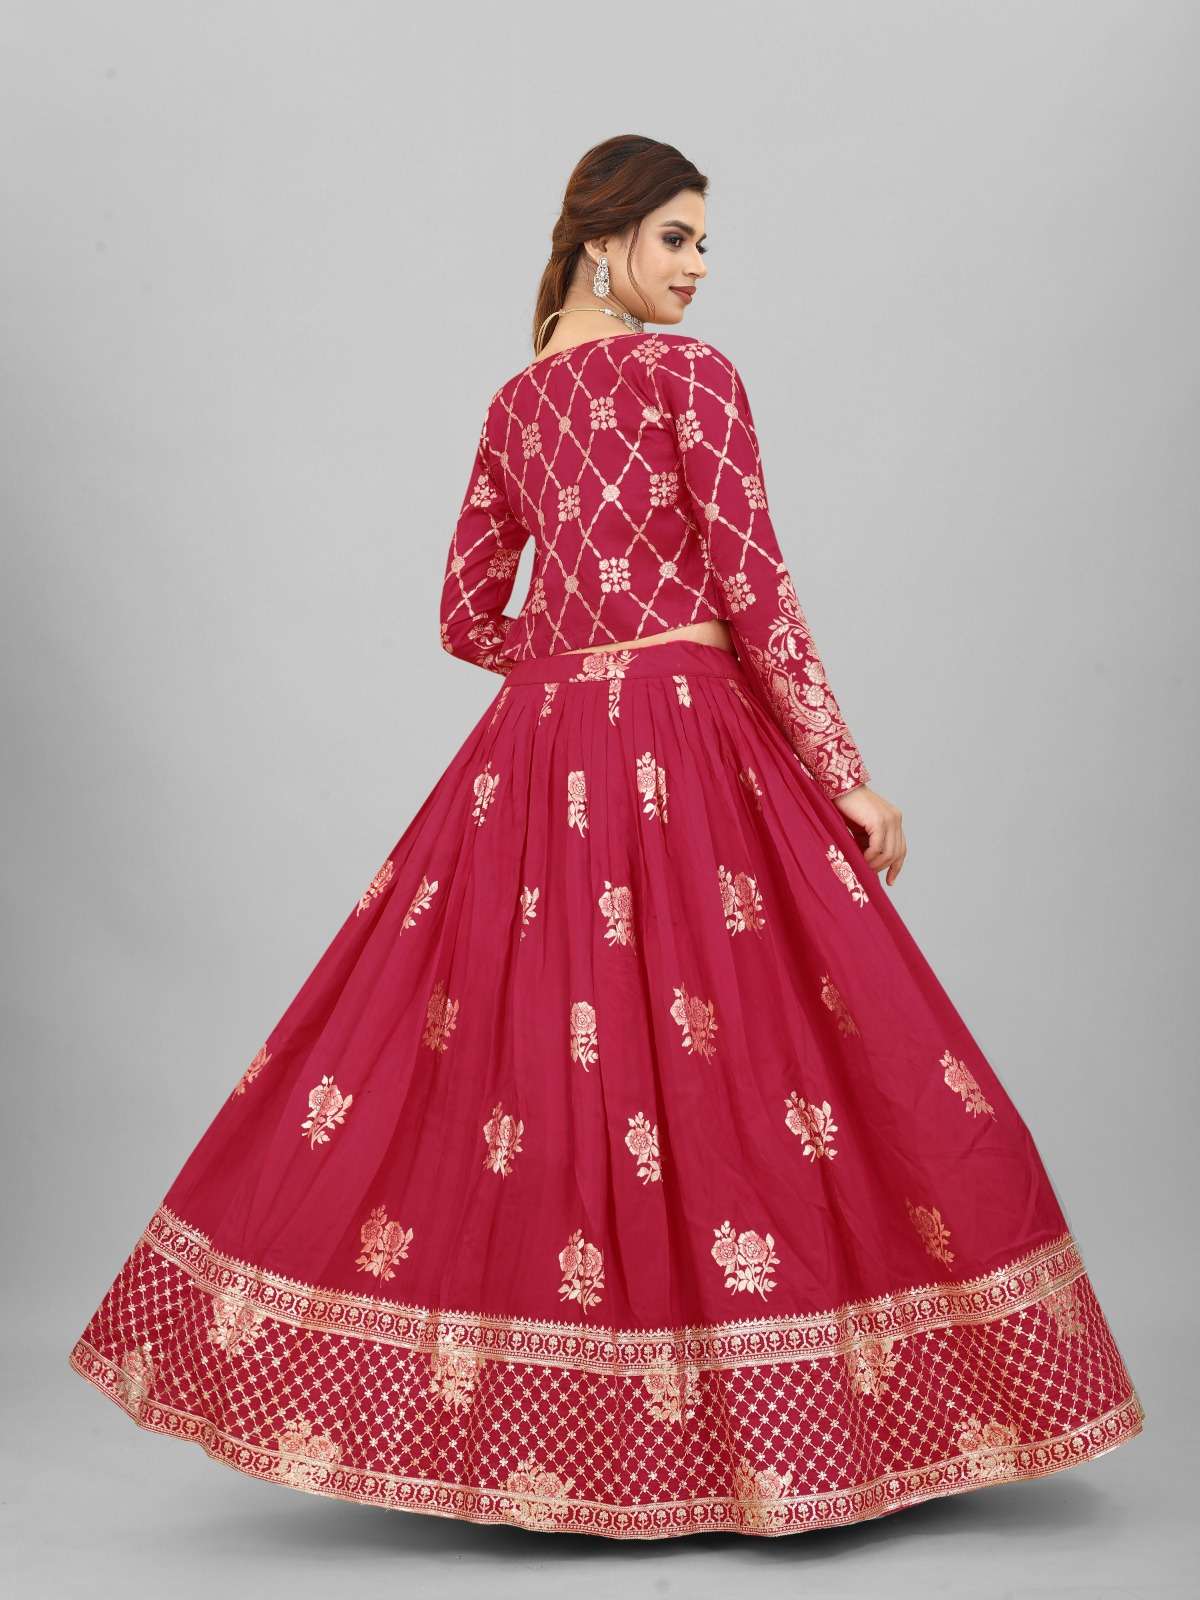 Raw Silk Black Lehenga Choli Pakistani Wedding Dresses | Party wear indian  dresses, Designer party wear dresses, Indian dresses traditional